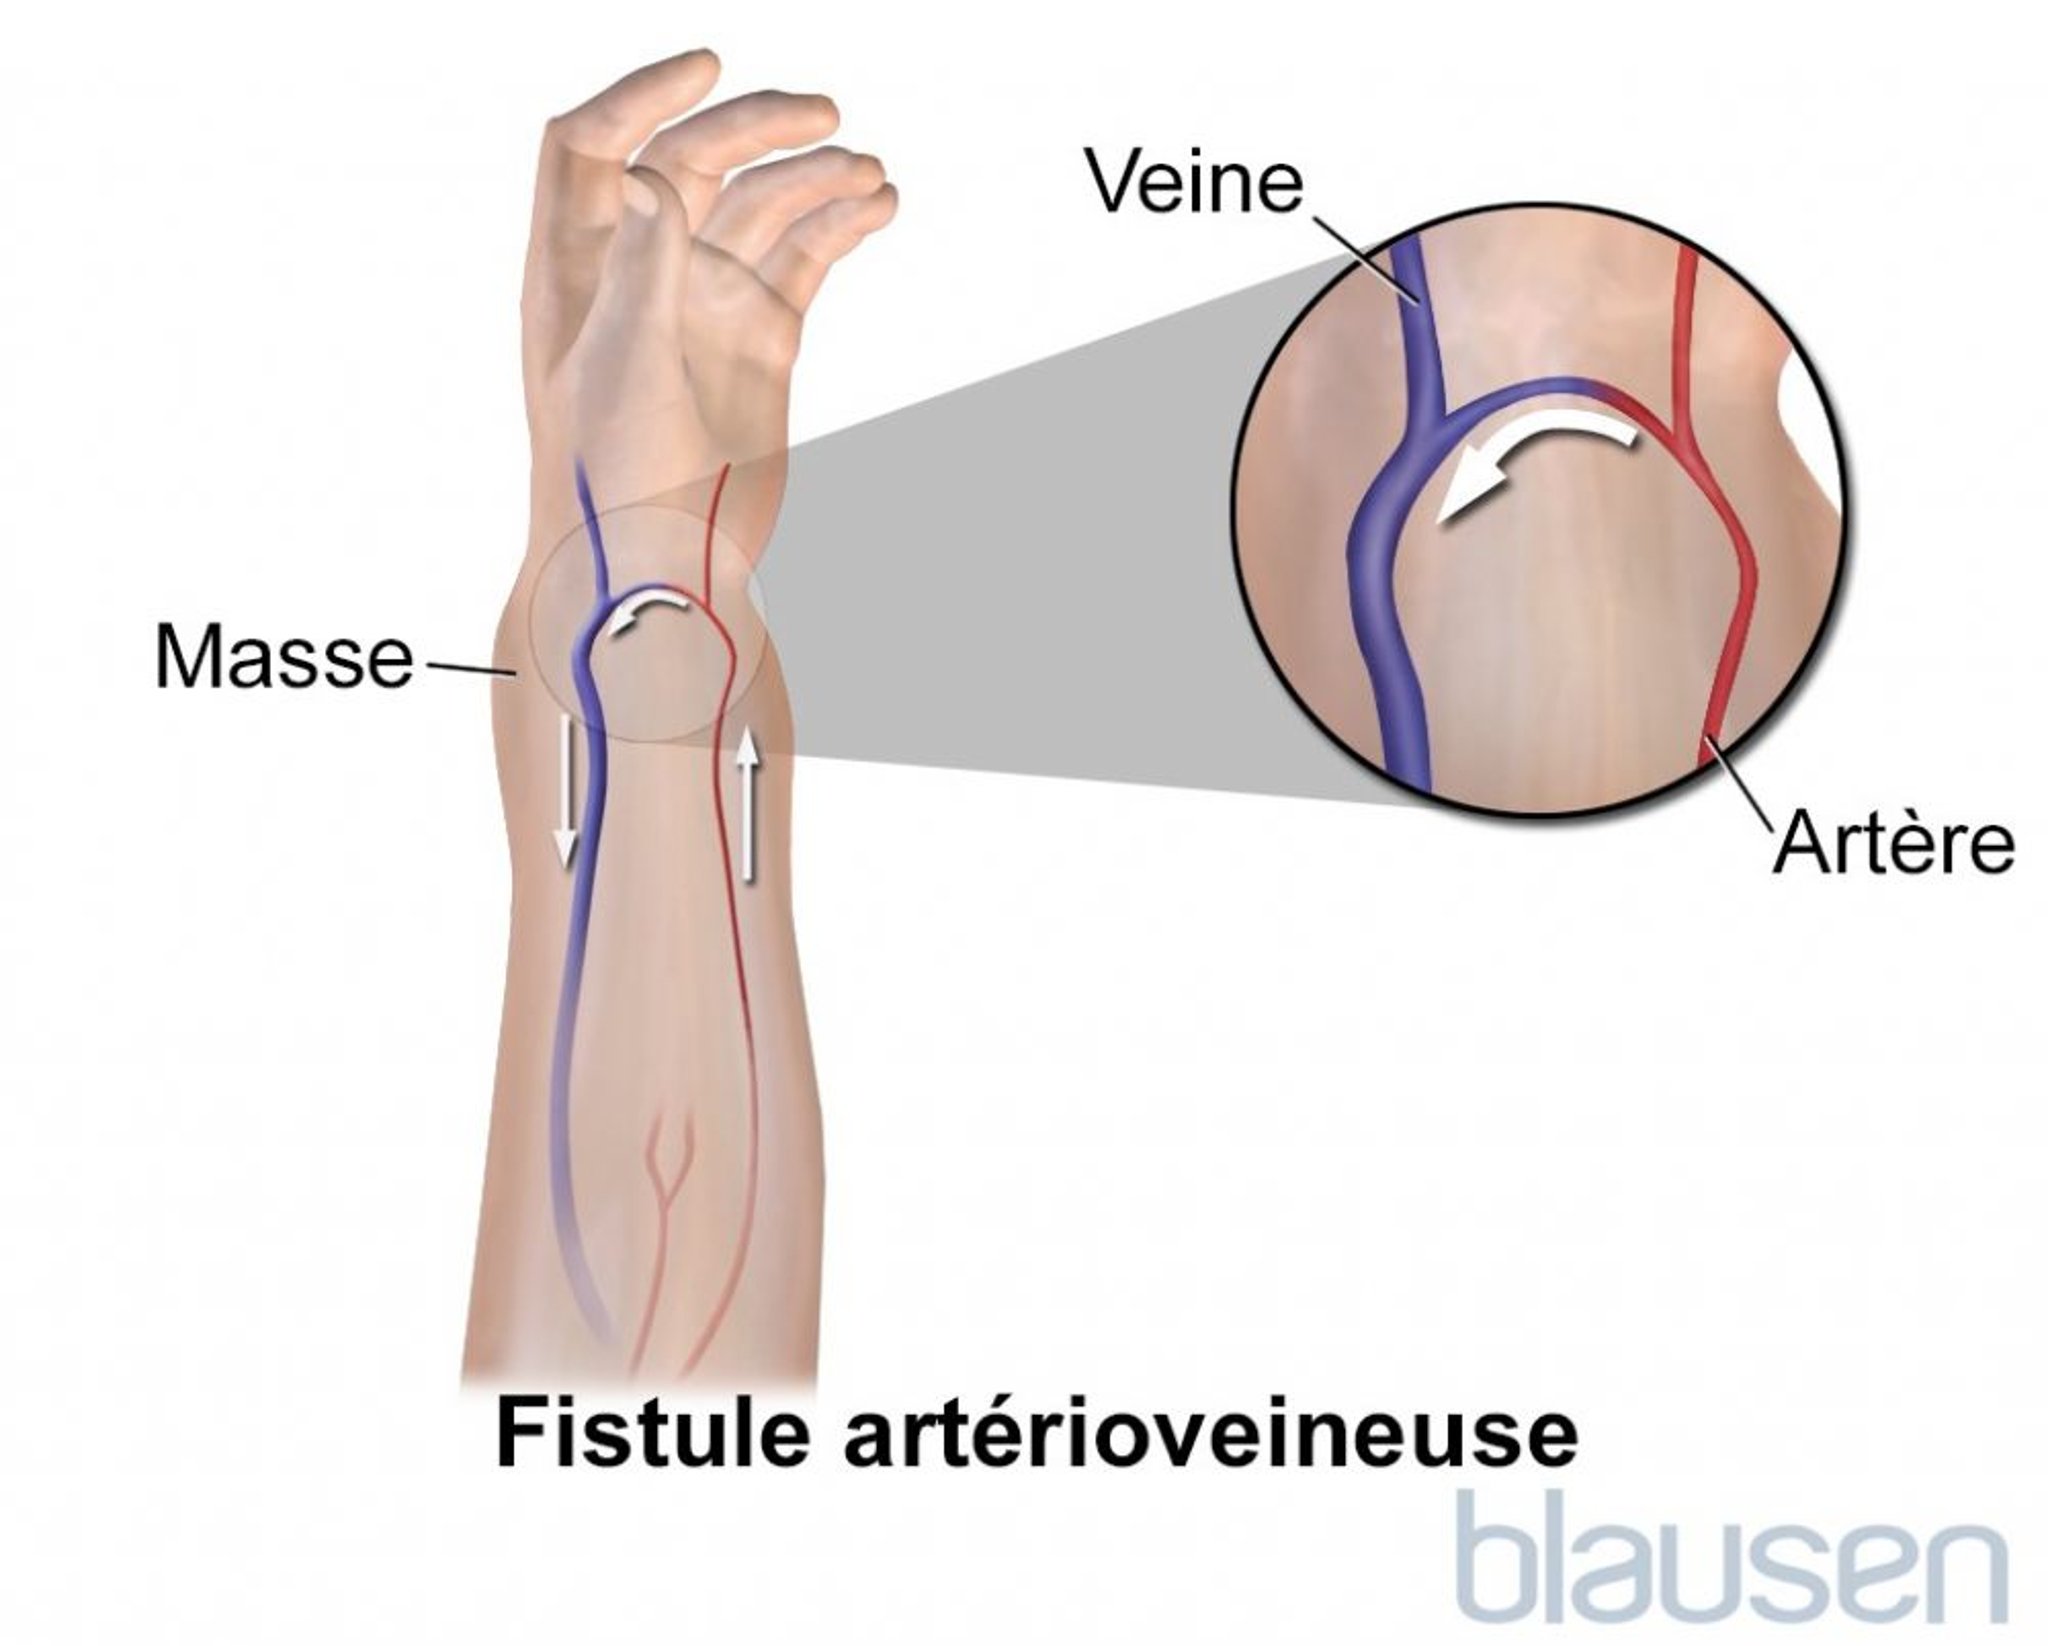 Fistule artério-veineuse